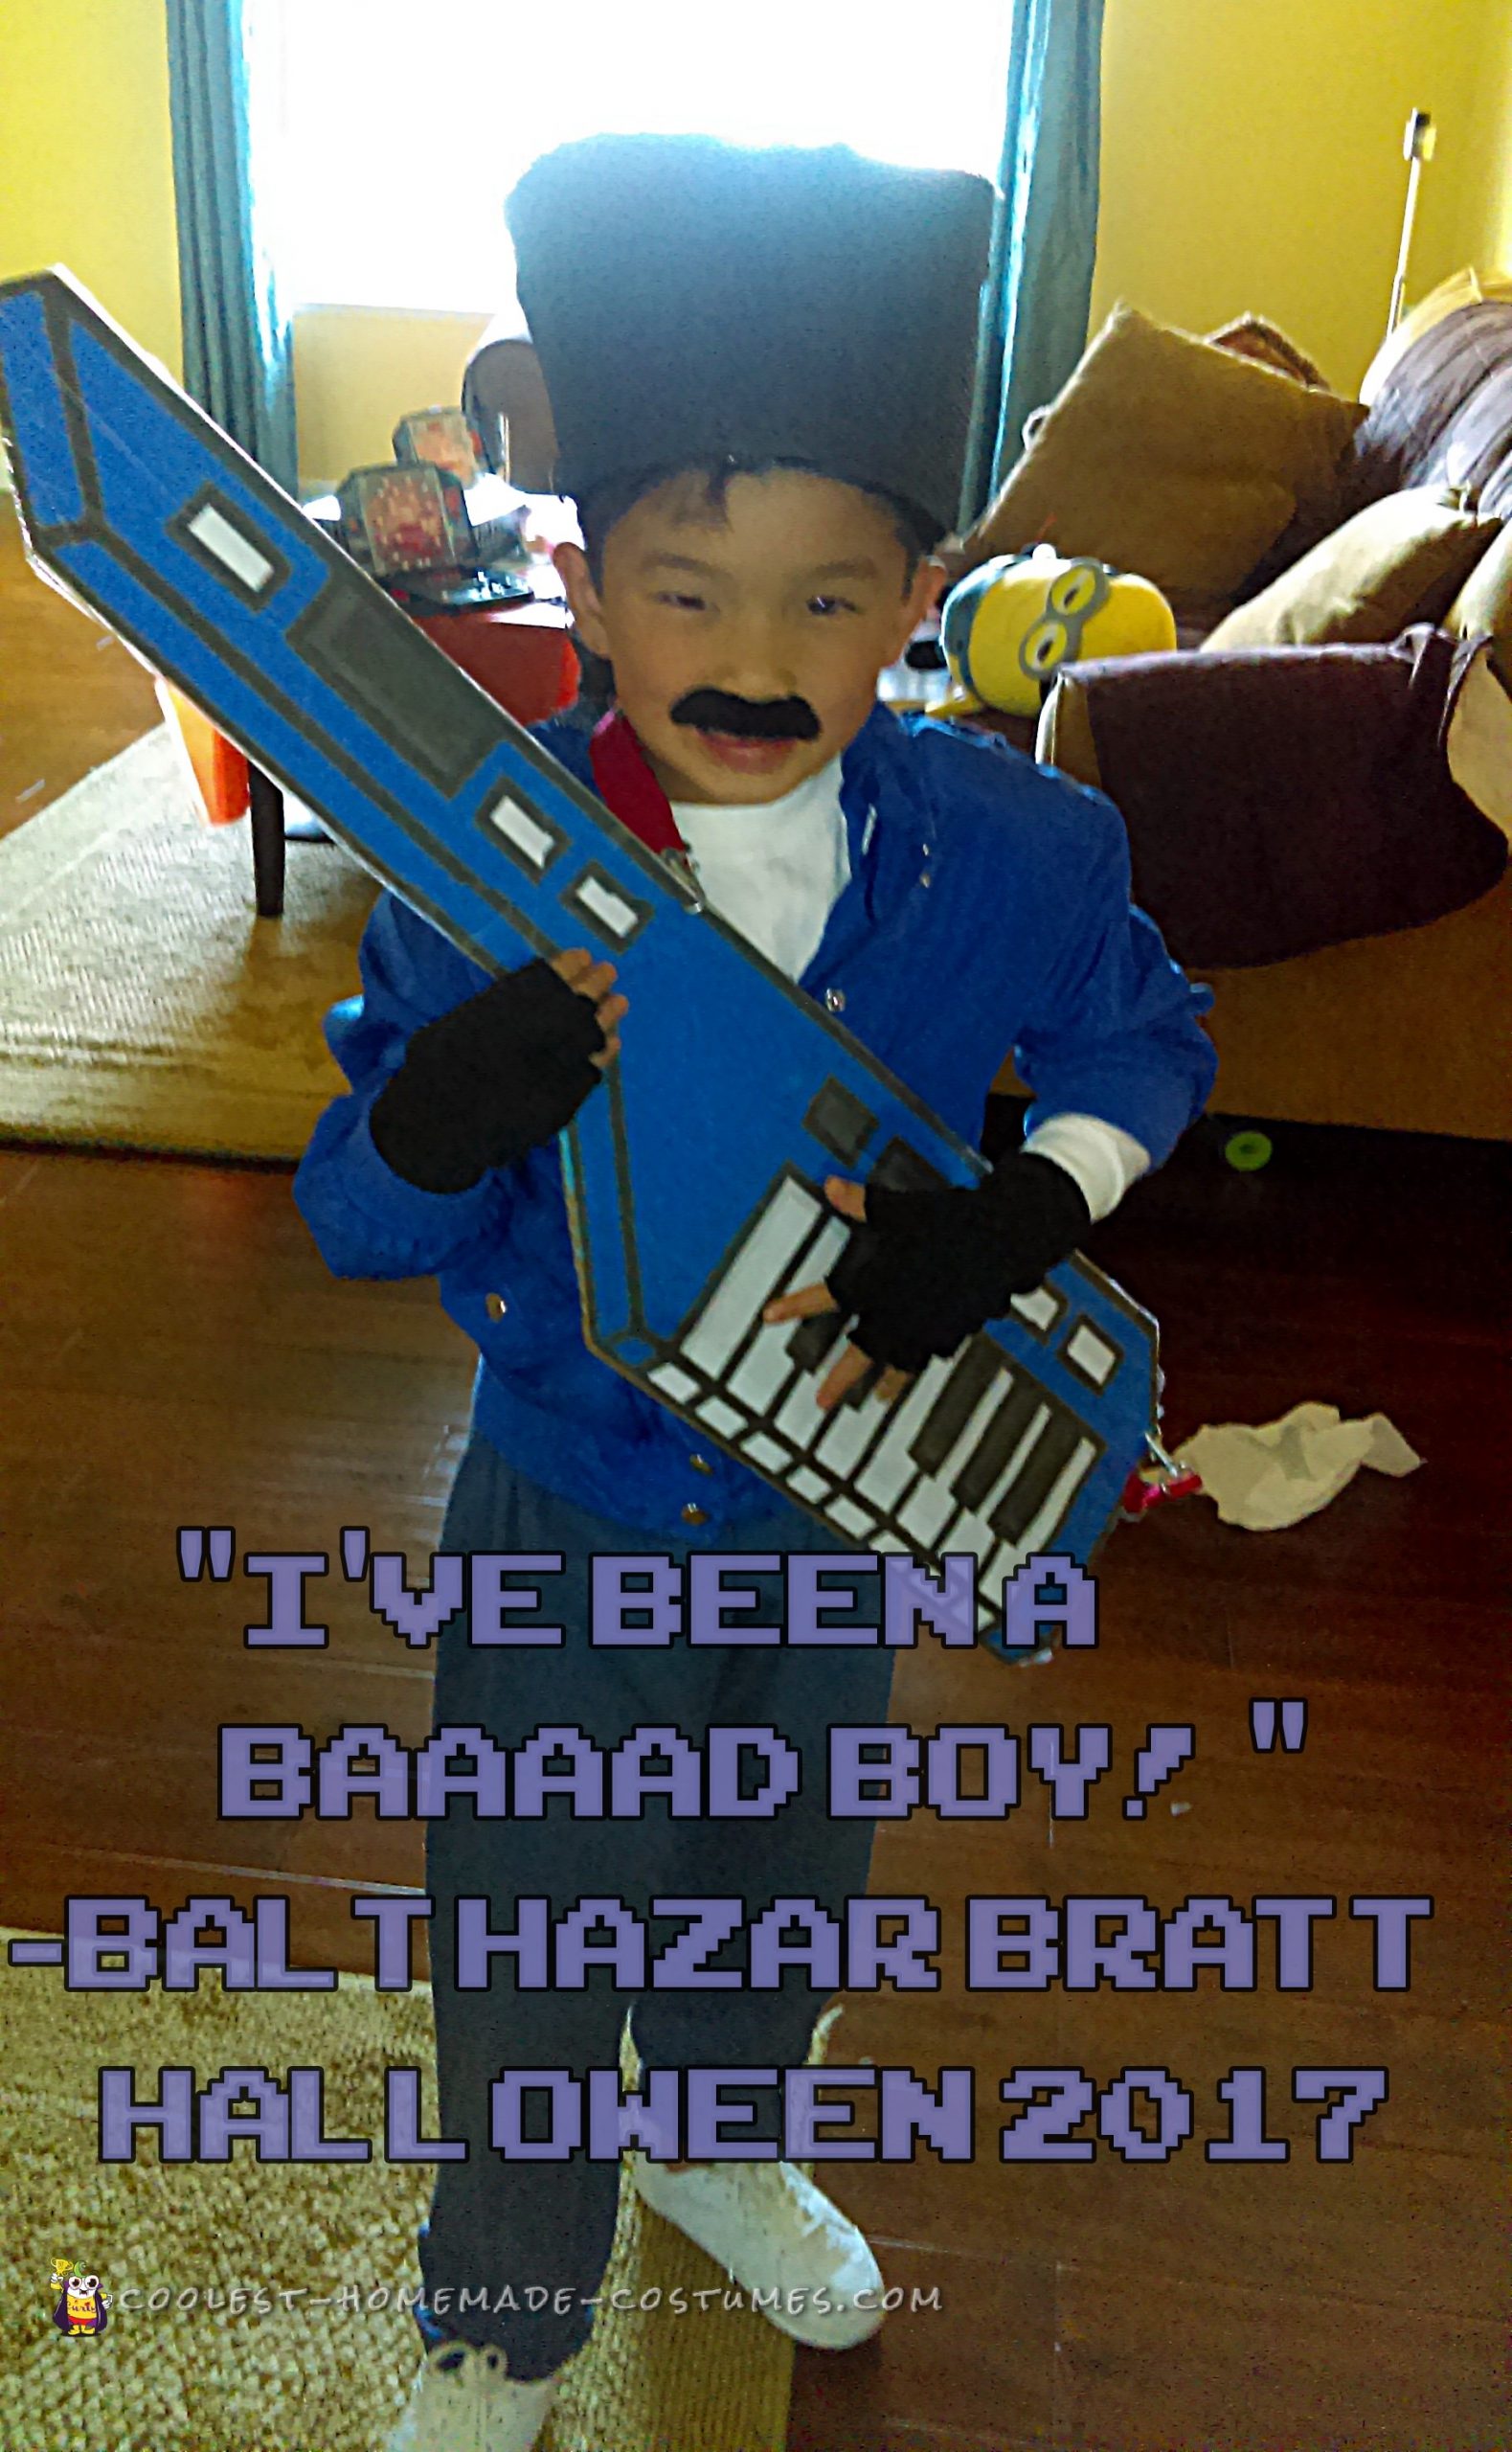 Balthazar Bratt for 7 year old